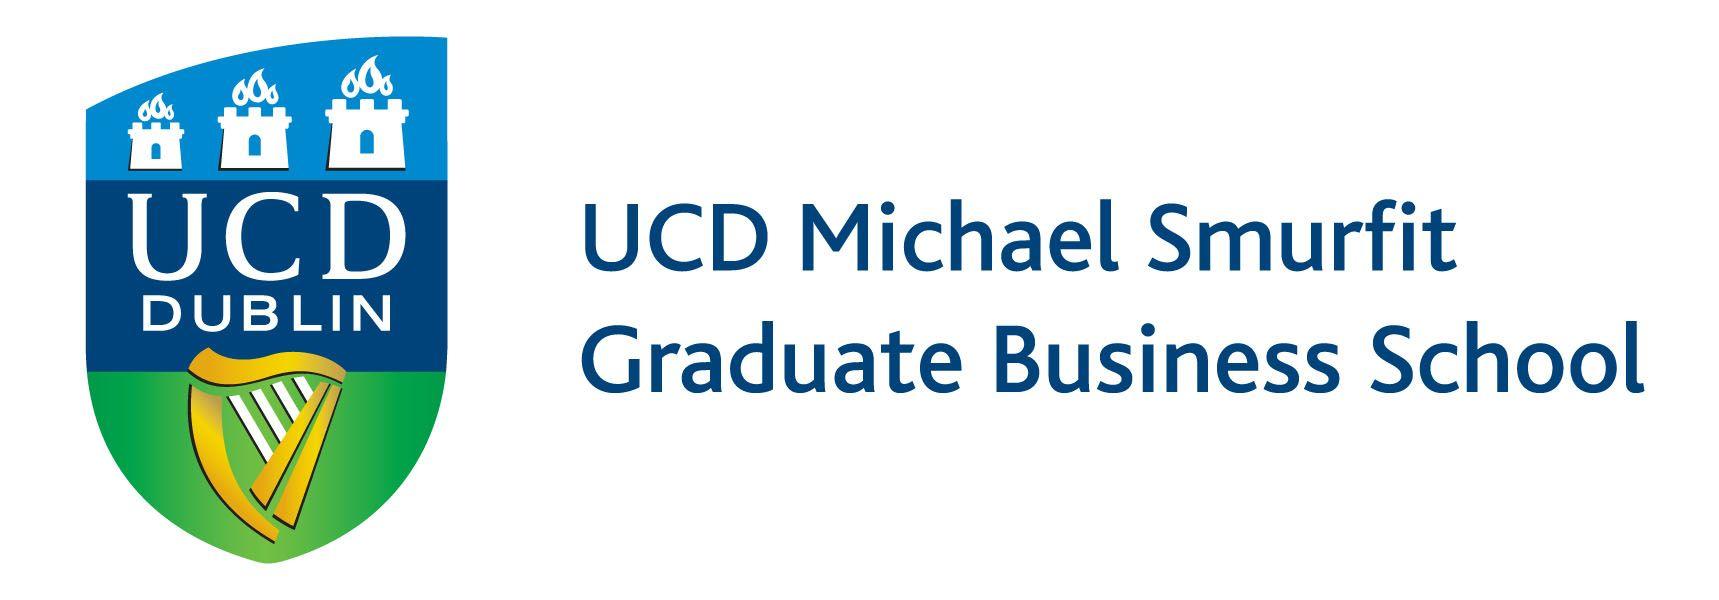 UCD Dublin Logo - University College Dublin: Smurfit Business School • BusinessBecause